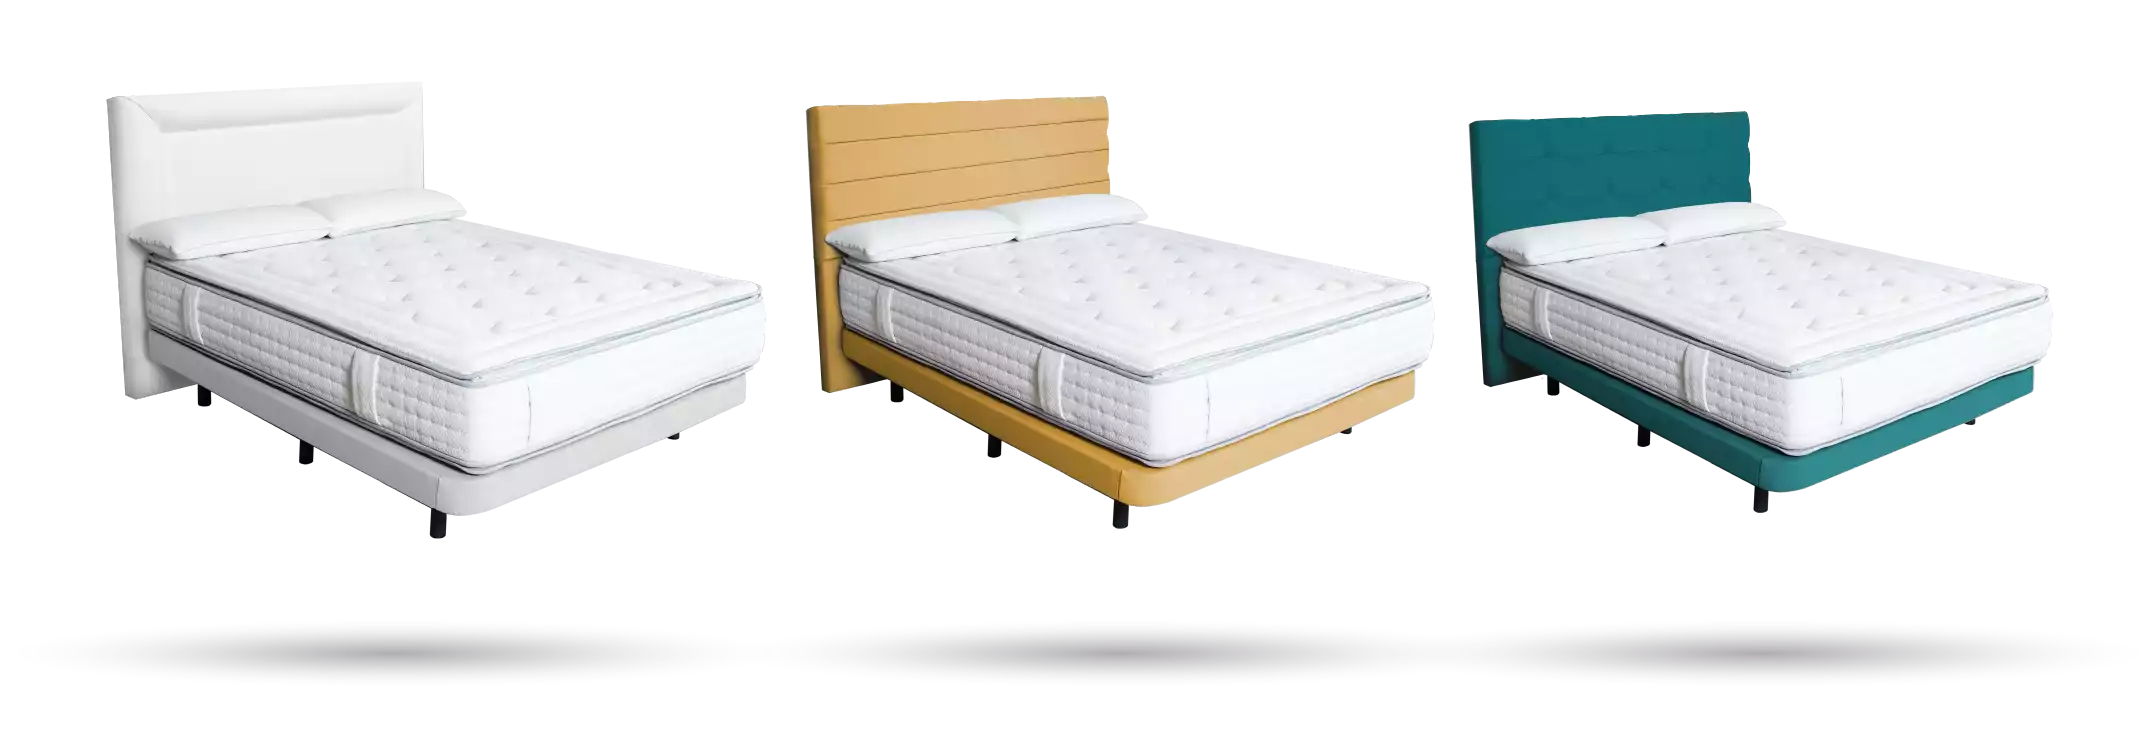 Cabeceros acolchados para camas